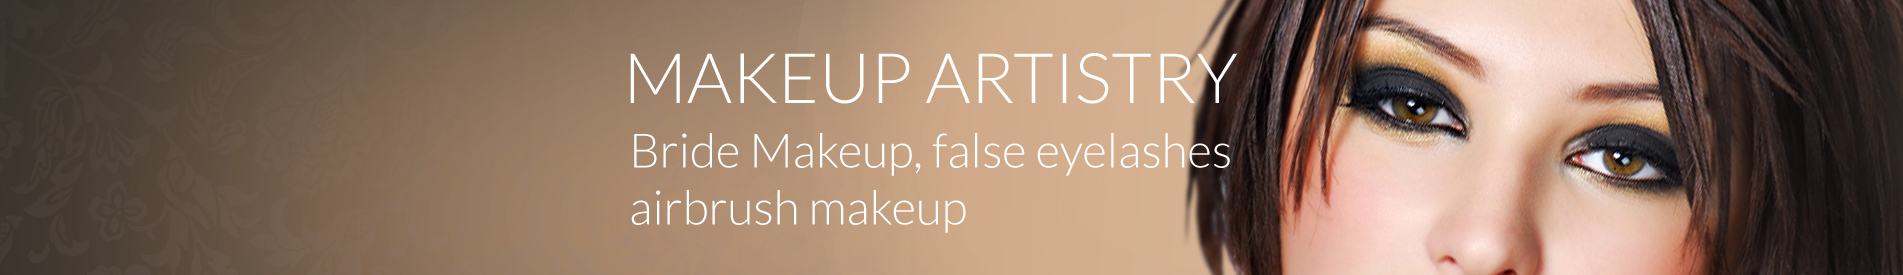 Makeup Artistry - Bridal Makeup | False Eyelashes | Airbrush Makeup